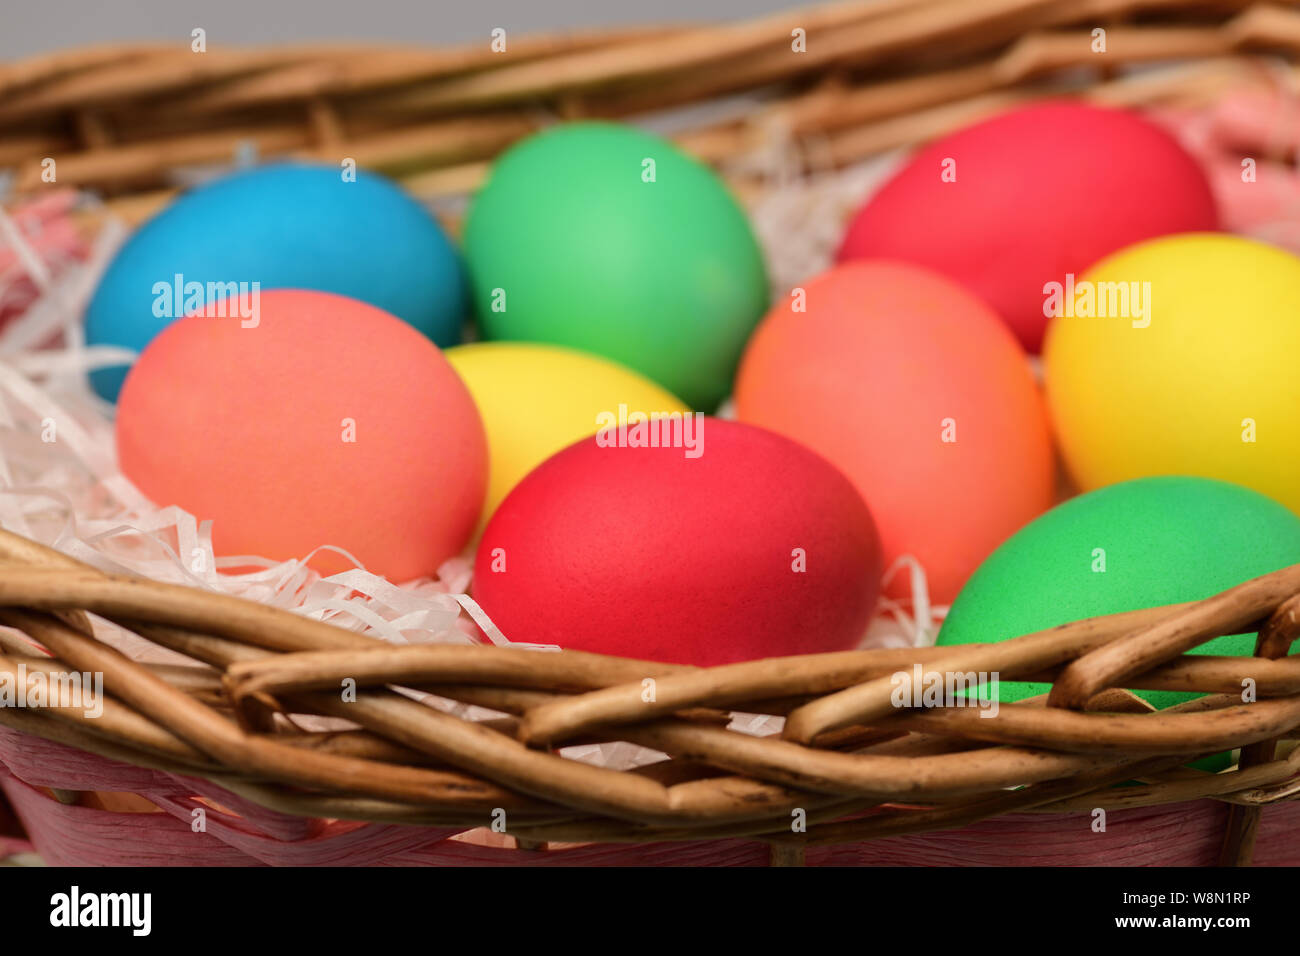 Huevos de Pascua de colores diferentes que se encuentran en una cesta de mimbre cerca. Fotografía horizontal Foto de stock